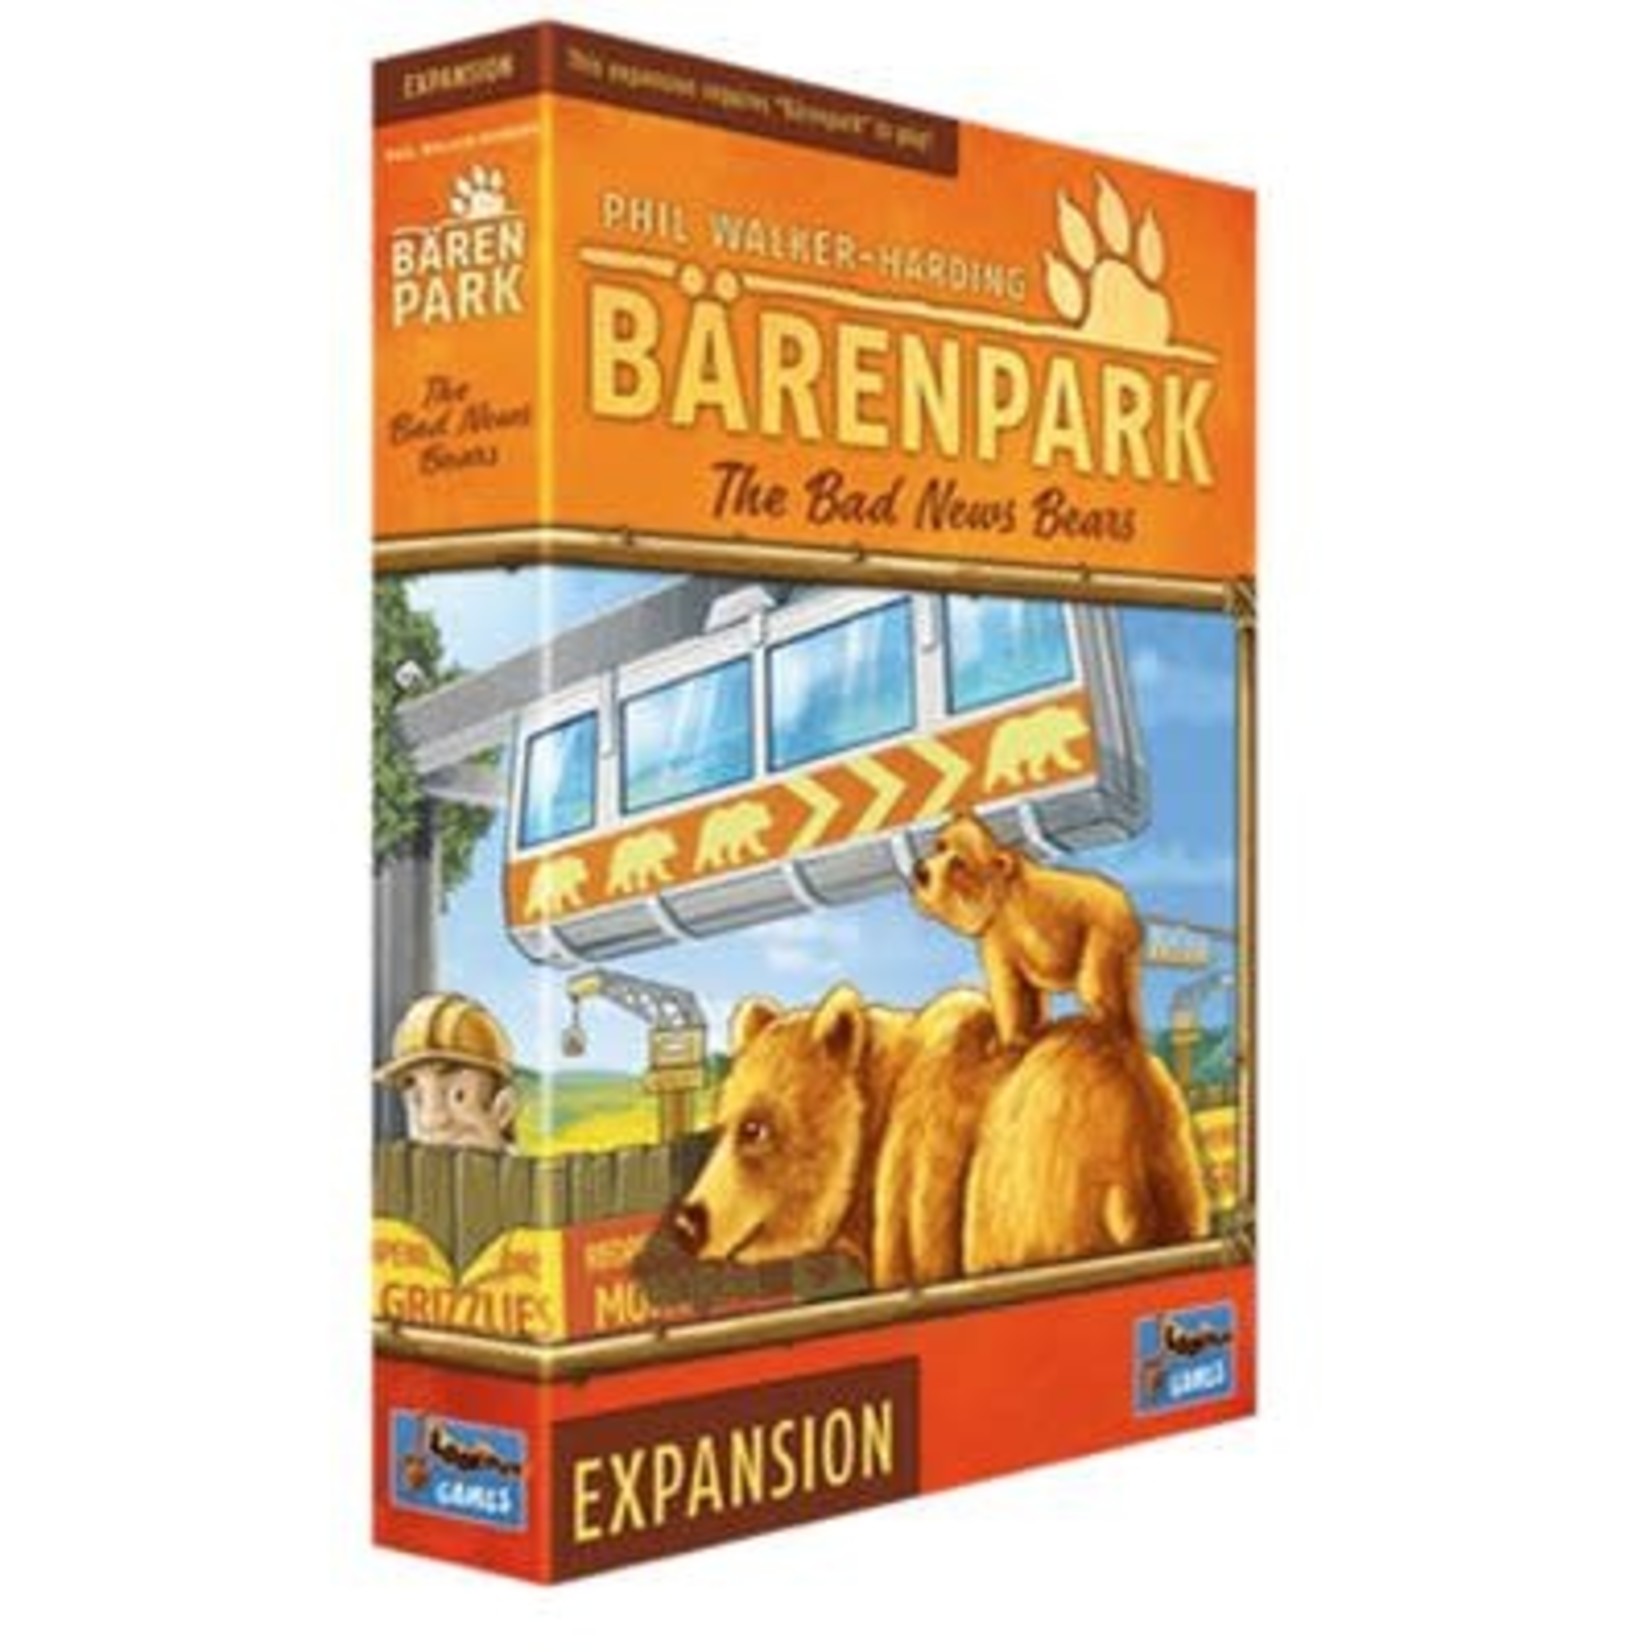 Barenpark The Bad News Bears Expansion